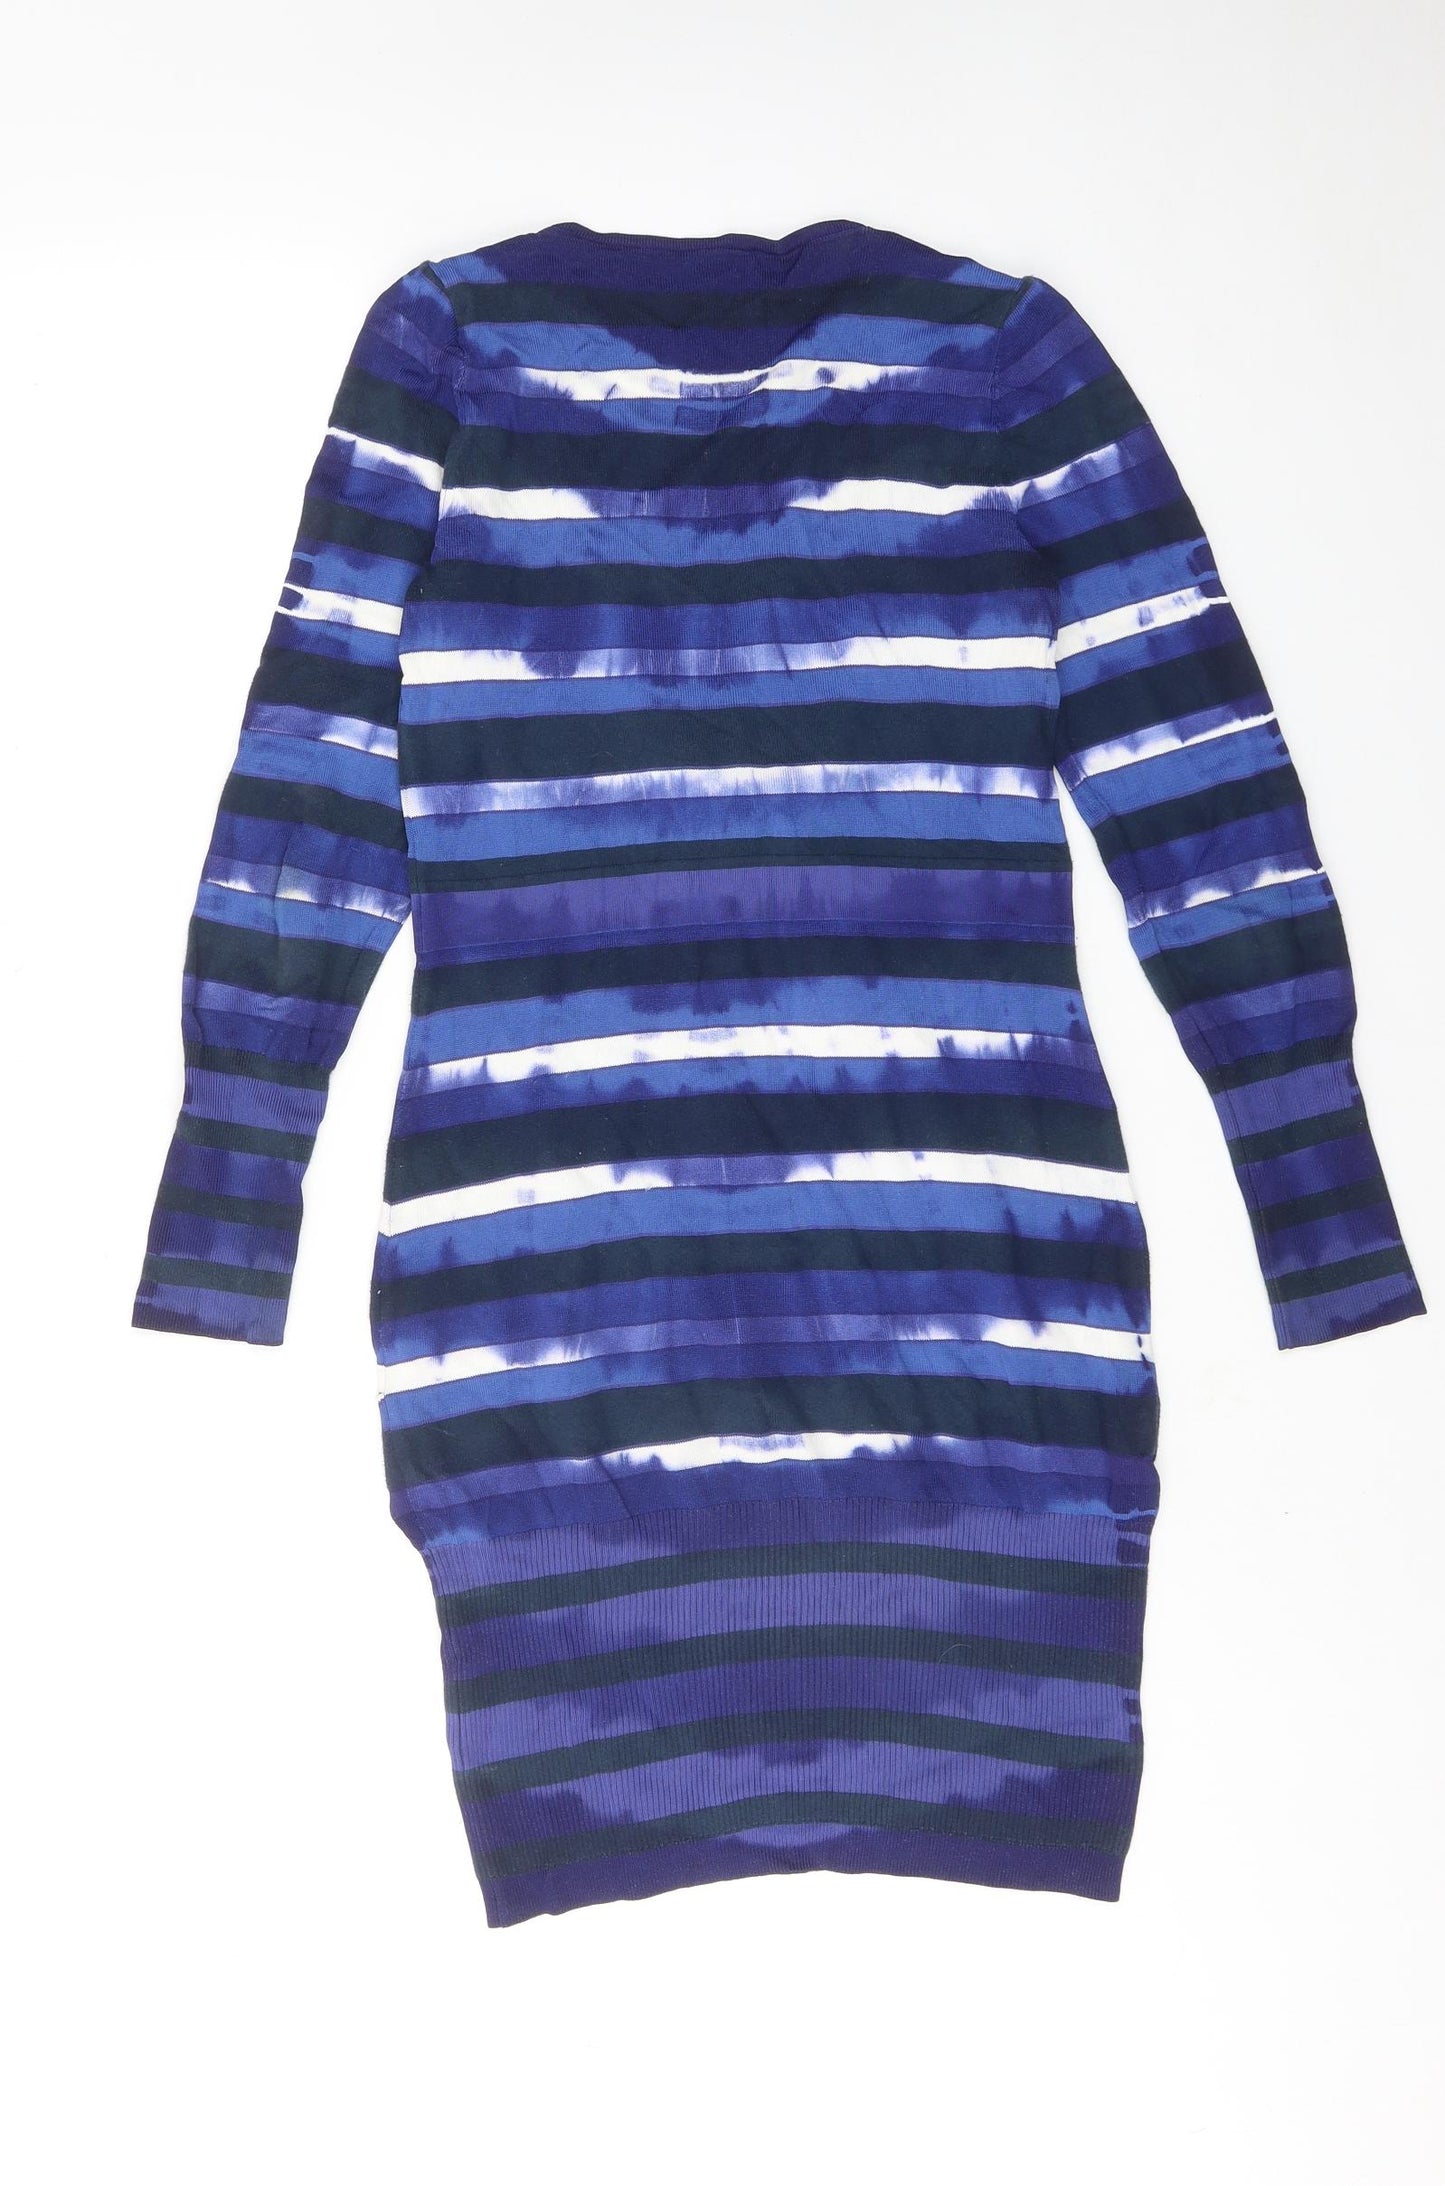 Karen Millen Womens Blue Geometric Cotton Jumper Dress Size S Round Neck Pullover